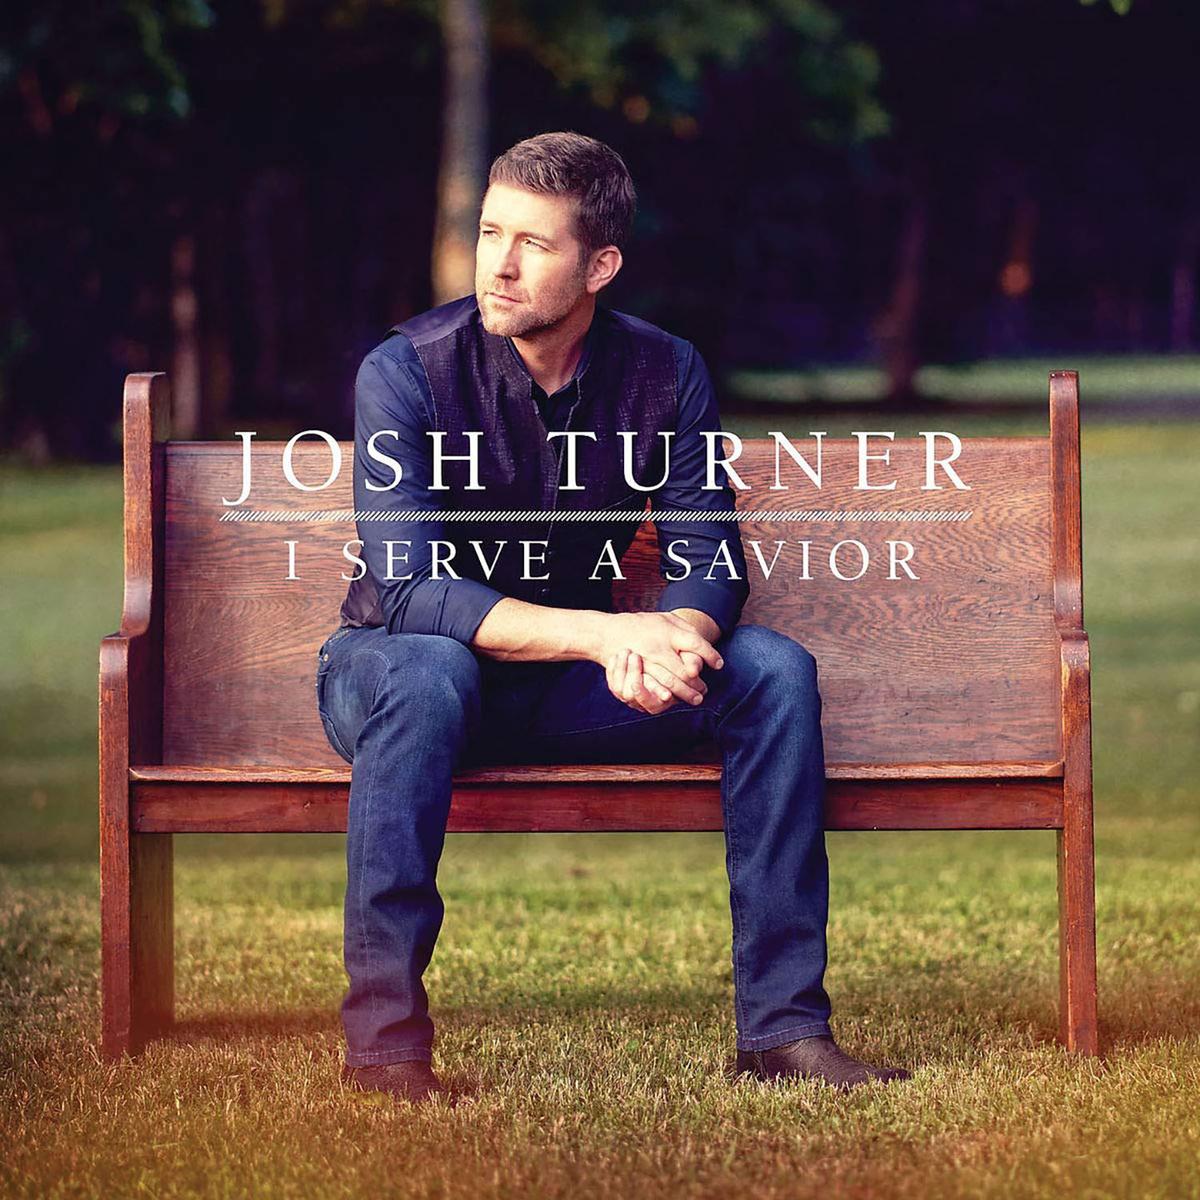 Josh Turner's 2018 album "I Serve a Savior." (Public Domain)